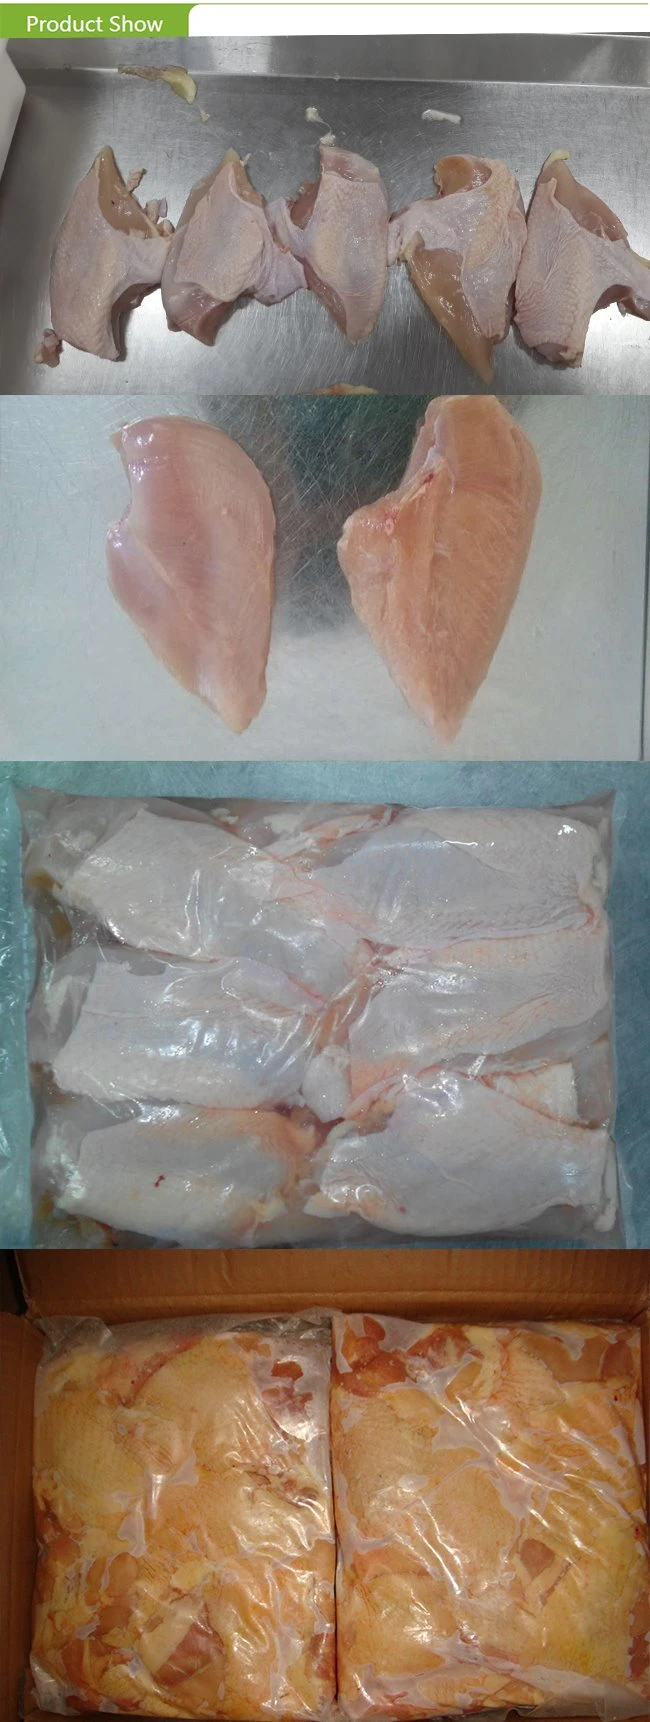 Frozen Chicken Breast with Halal Standard